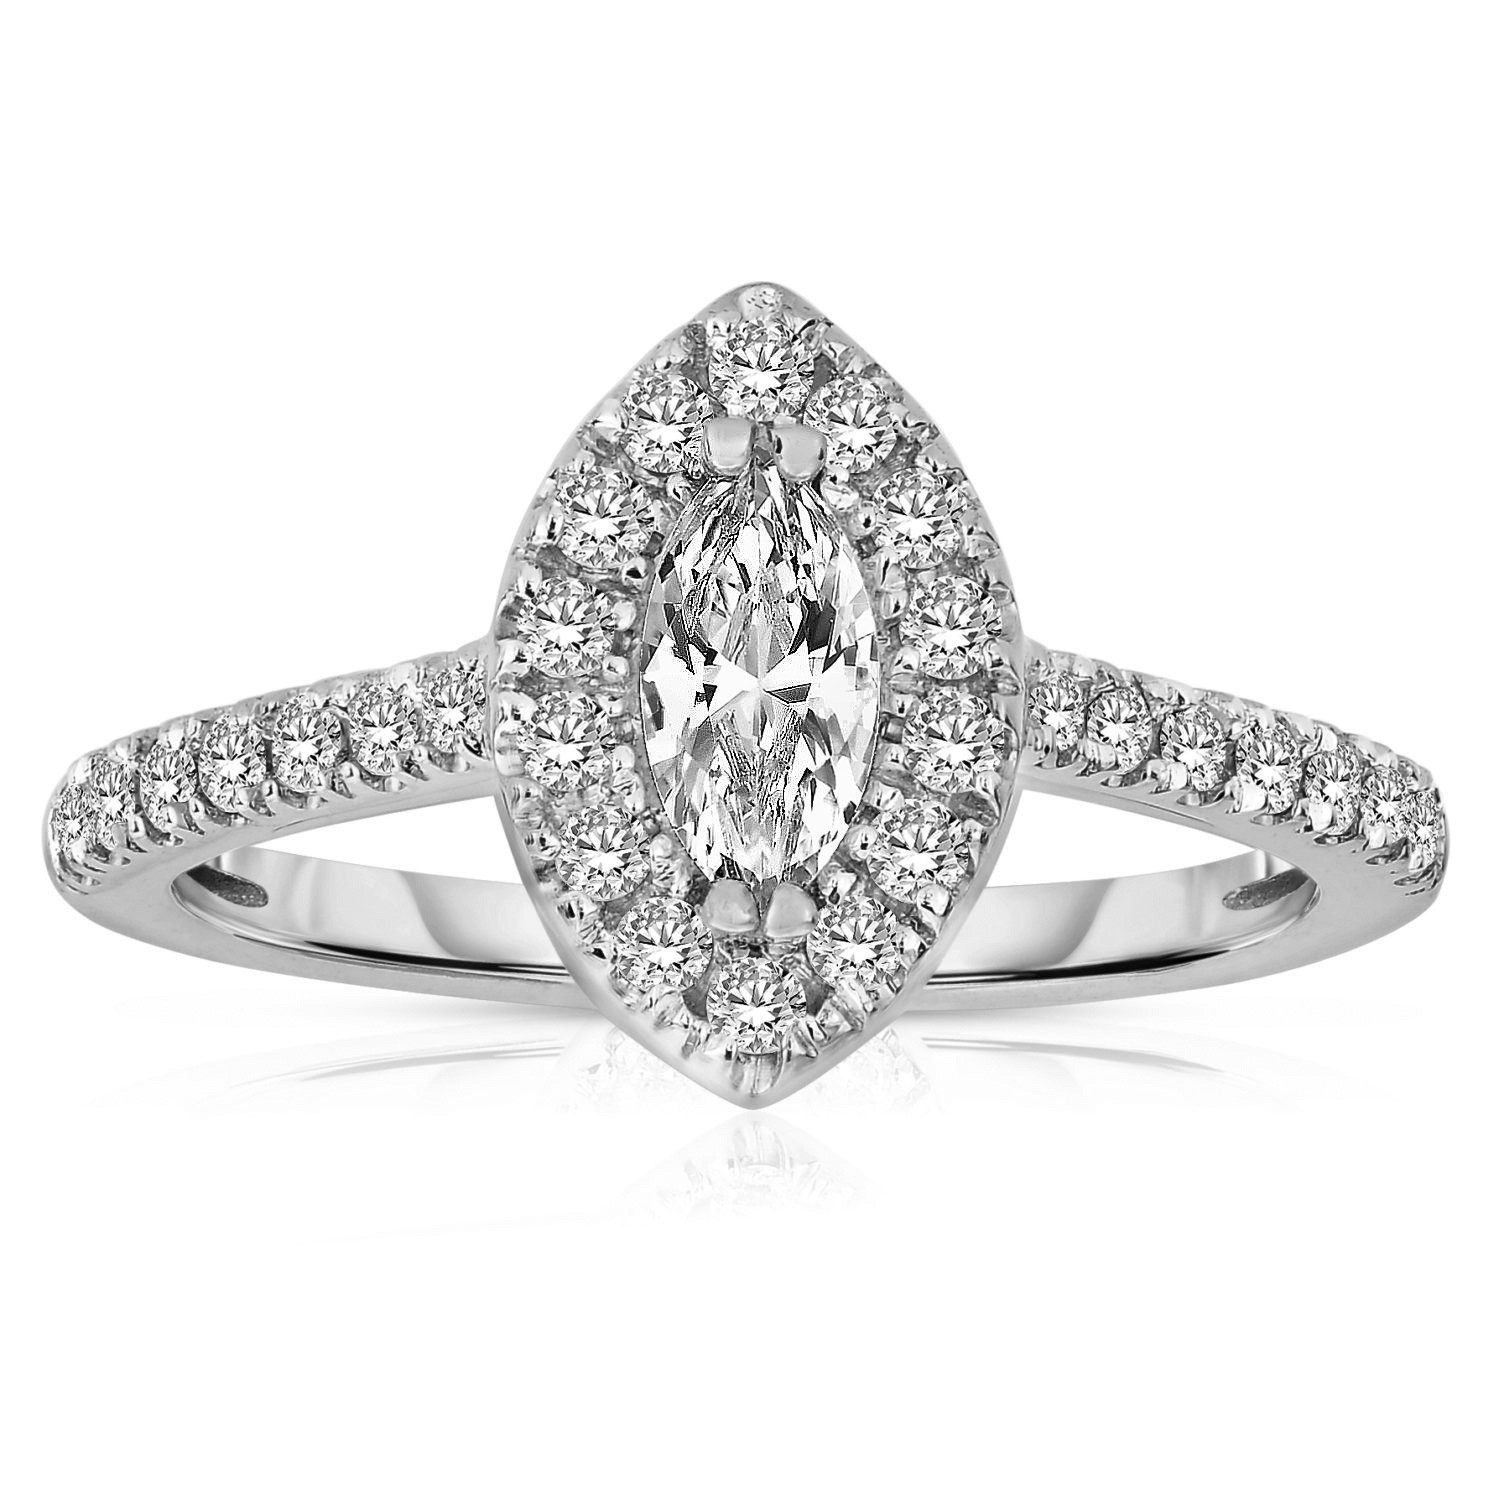 Marquise Diamond Engagement Ring
 Half Carat Marquise cut Halo Diamond Engagement Ring in